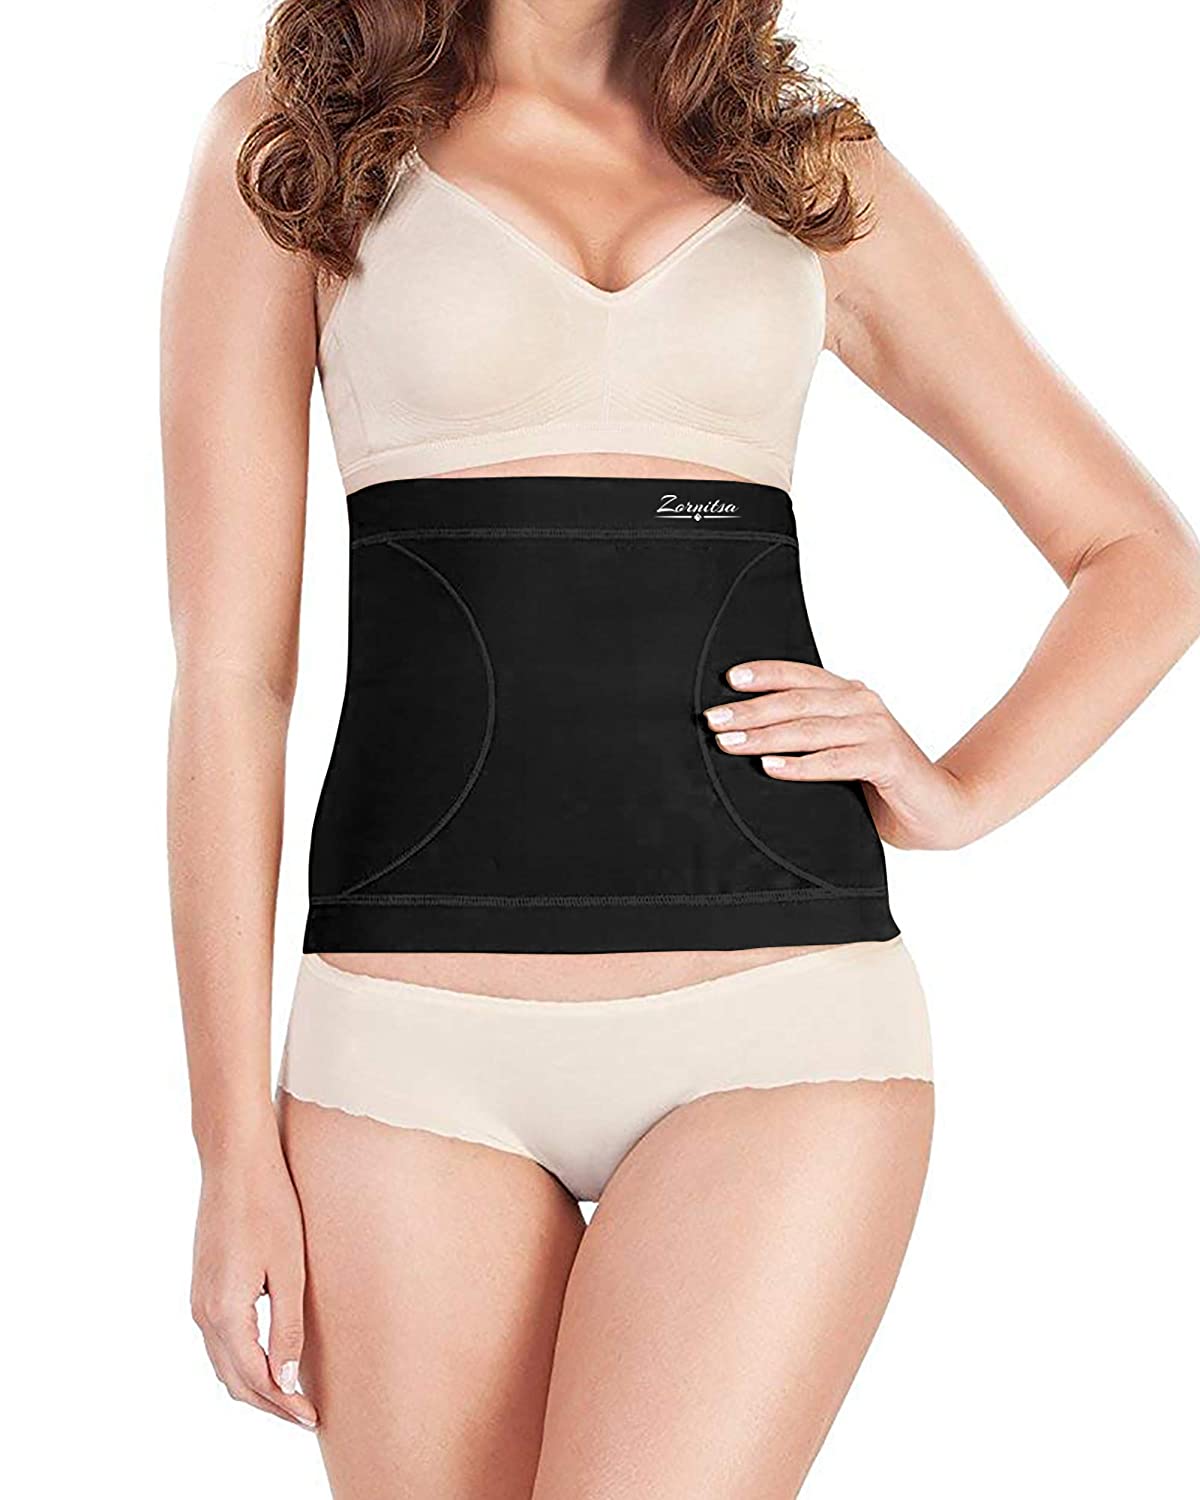 https://naricomfortwear.com/wp-content/uploads/2021/02/Nari-Comfort-Wear-3585-Women-Blended-Body-Waist-Shaper-Tummy-Tucker-Belt-1-Bk.jpg